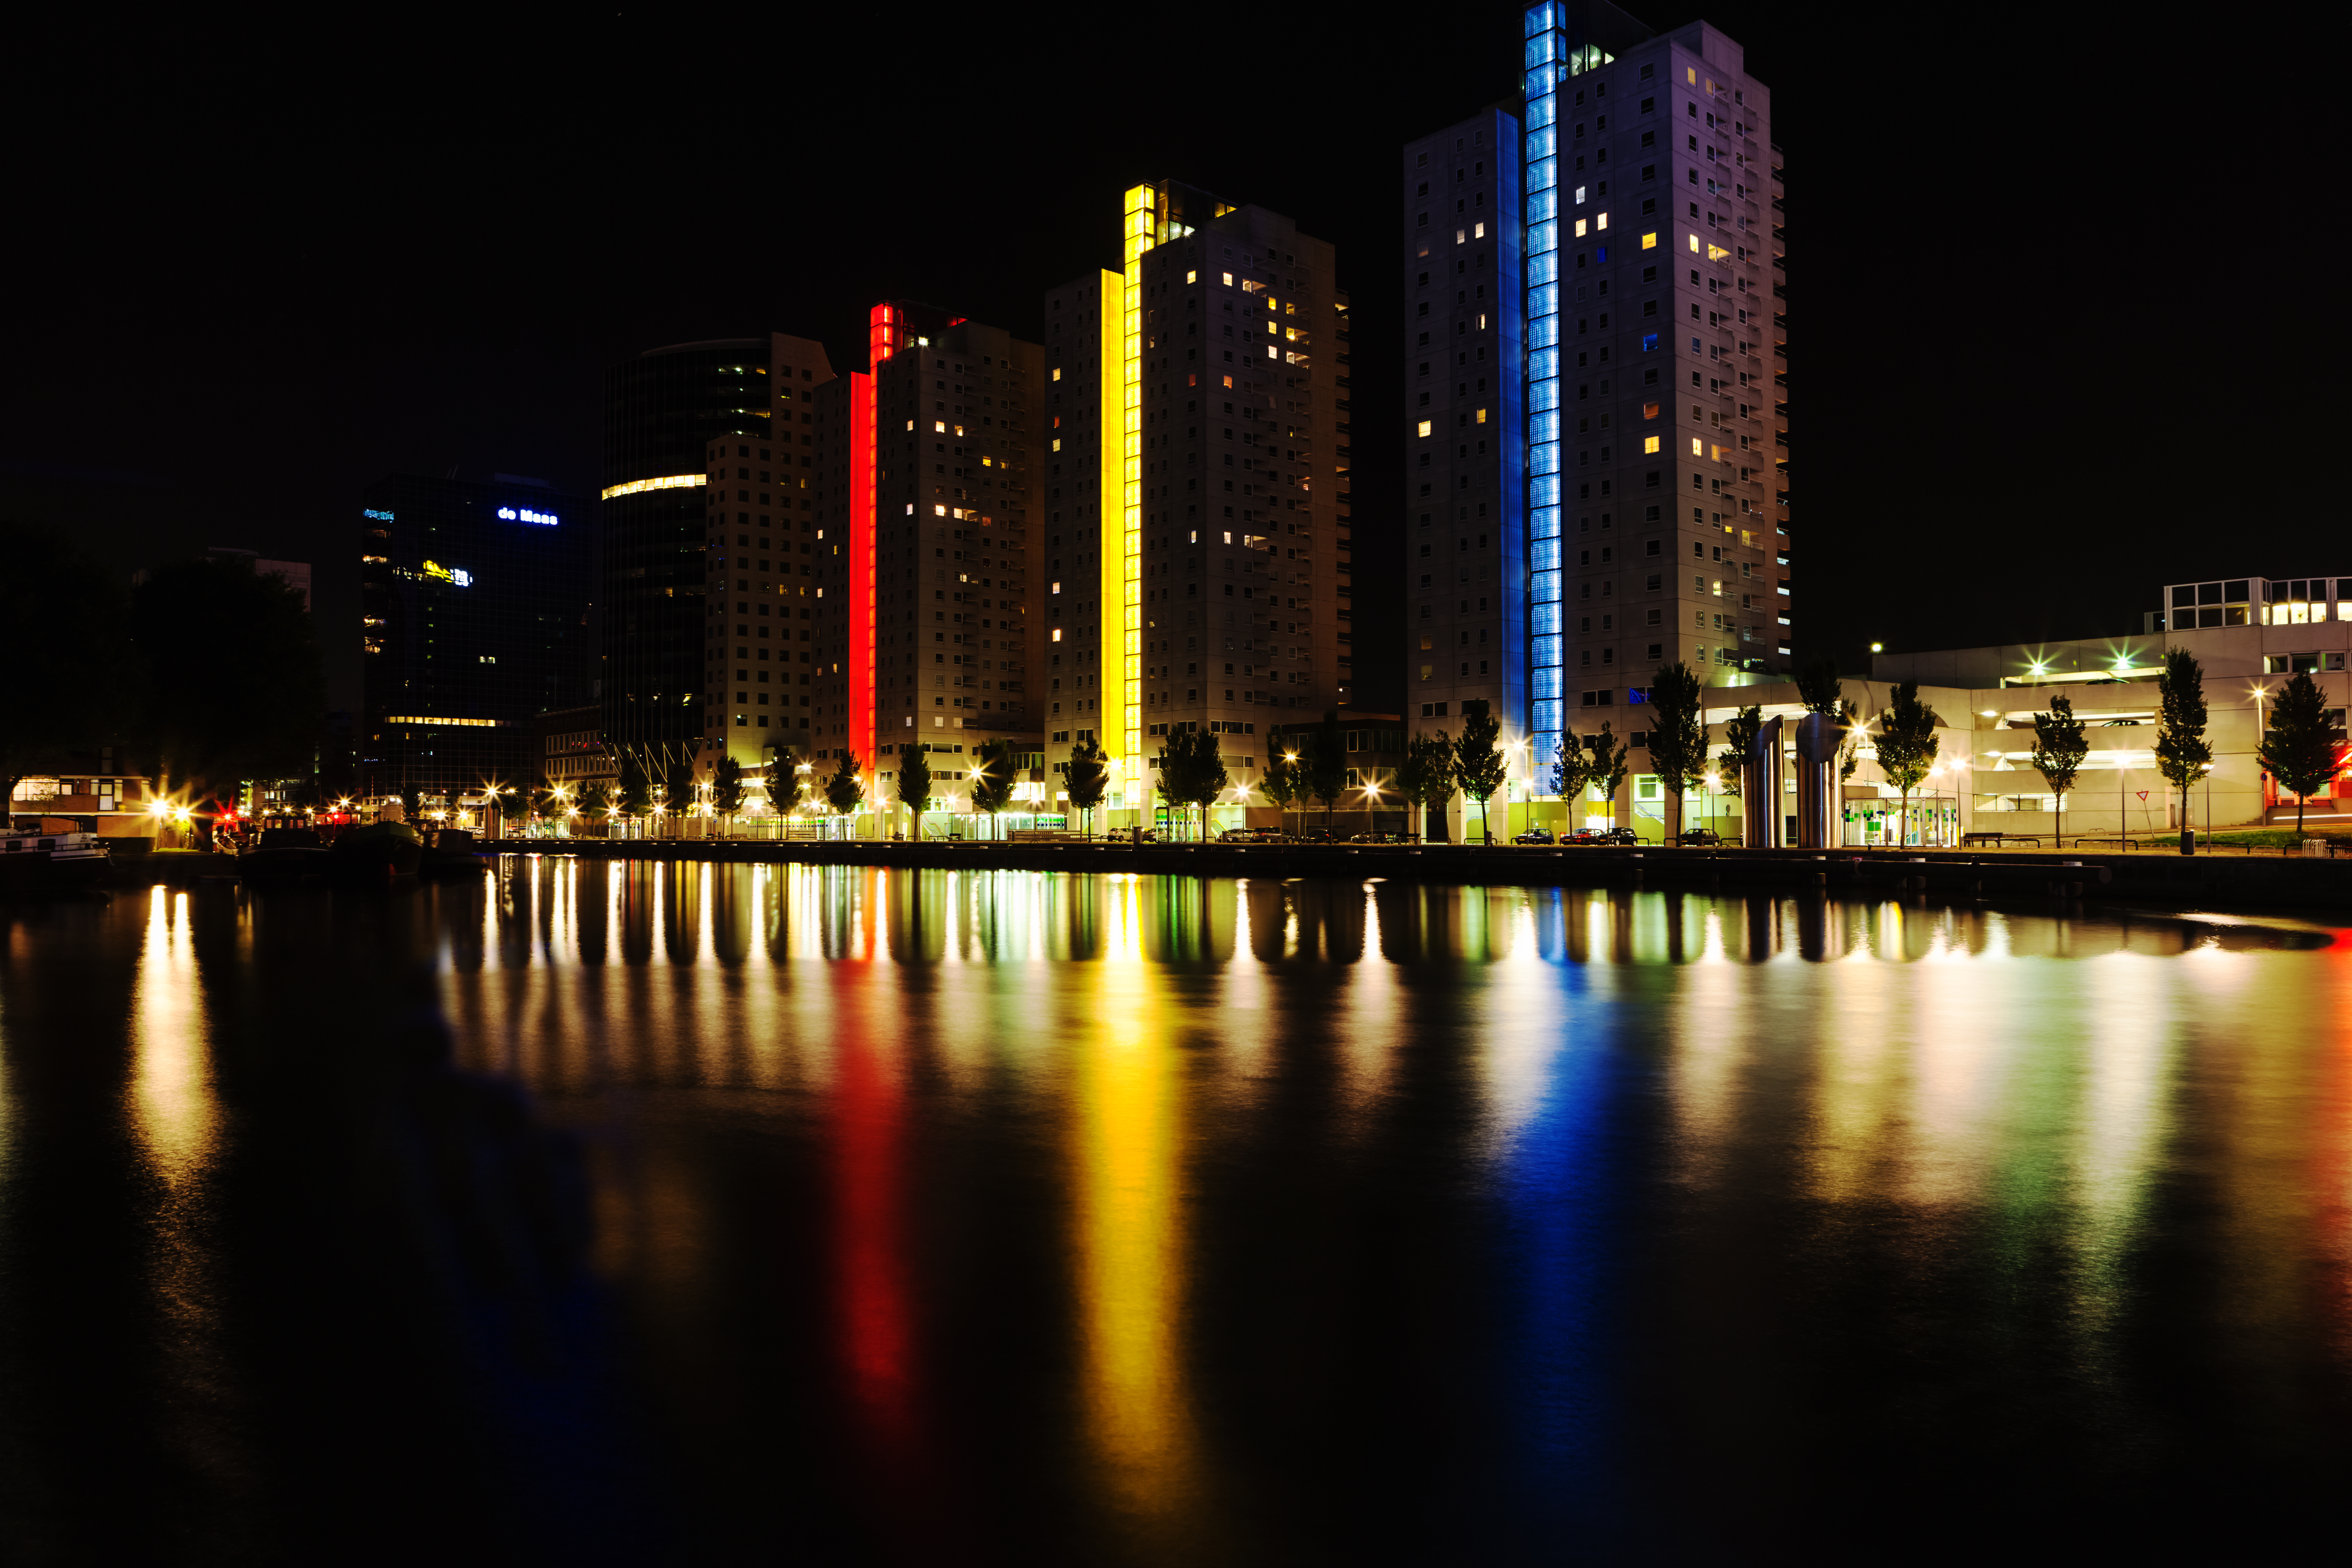 android motley, city, reflection, backlight, embankment, building, cities, illumination, quay, multicolored